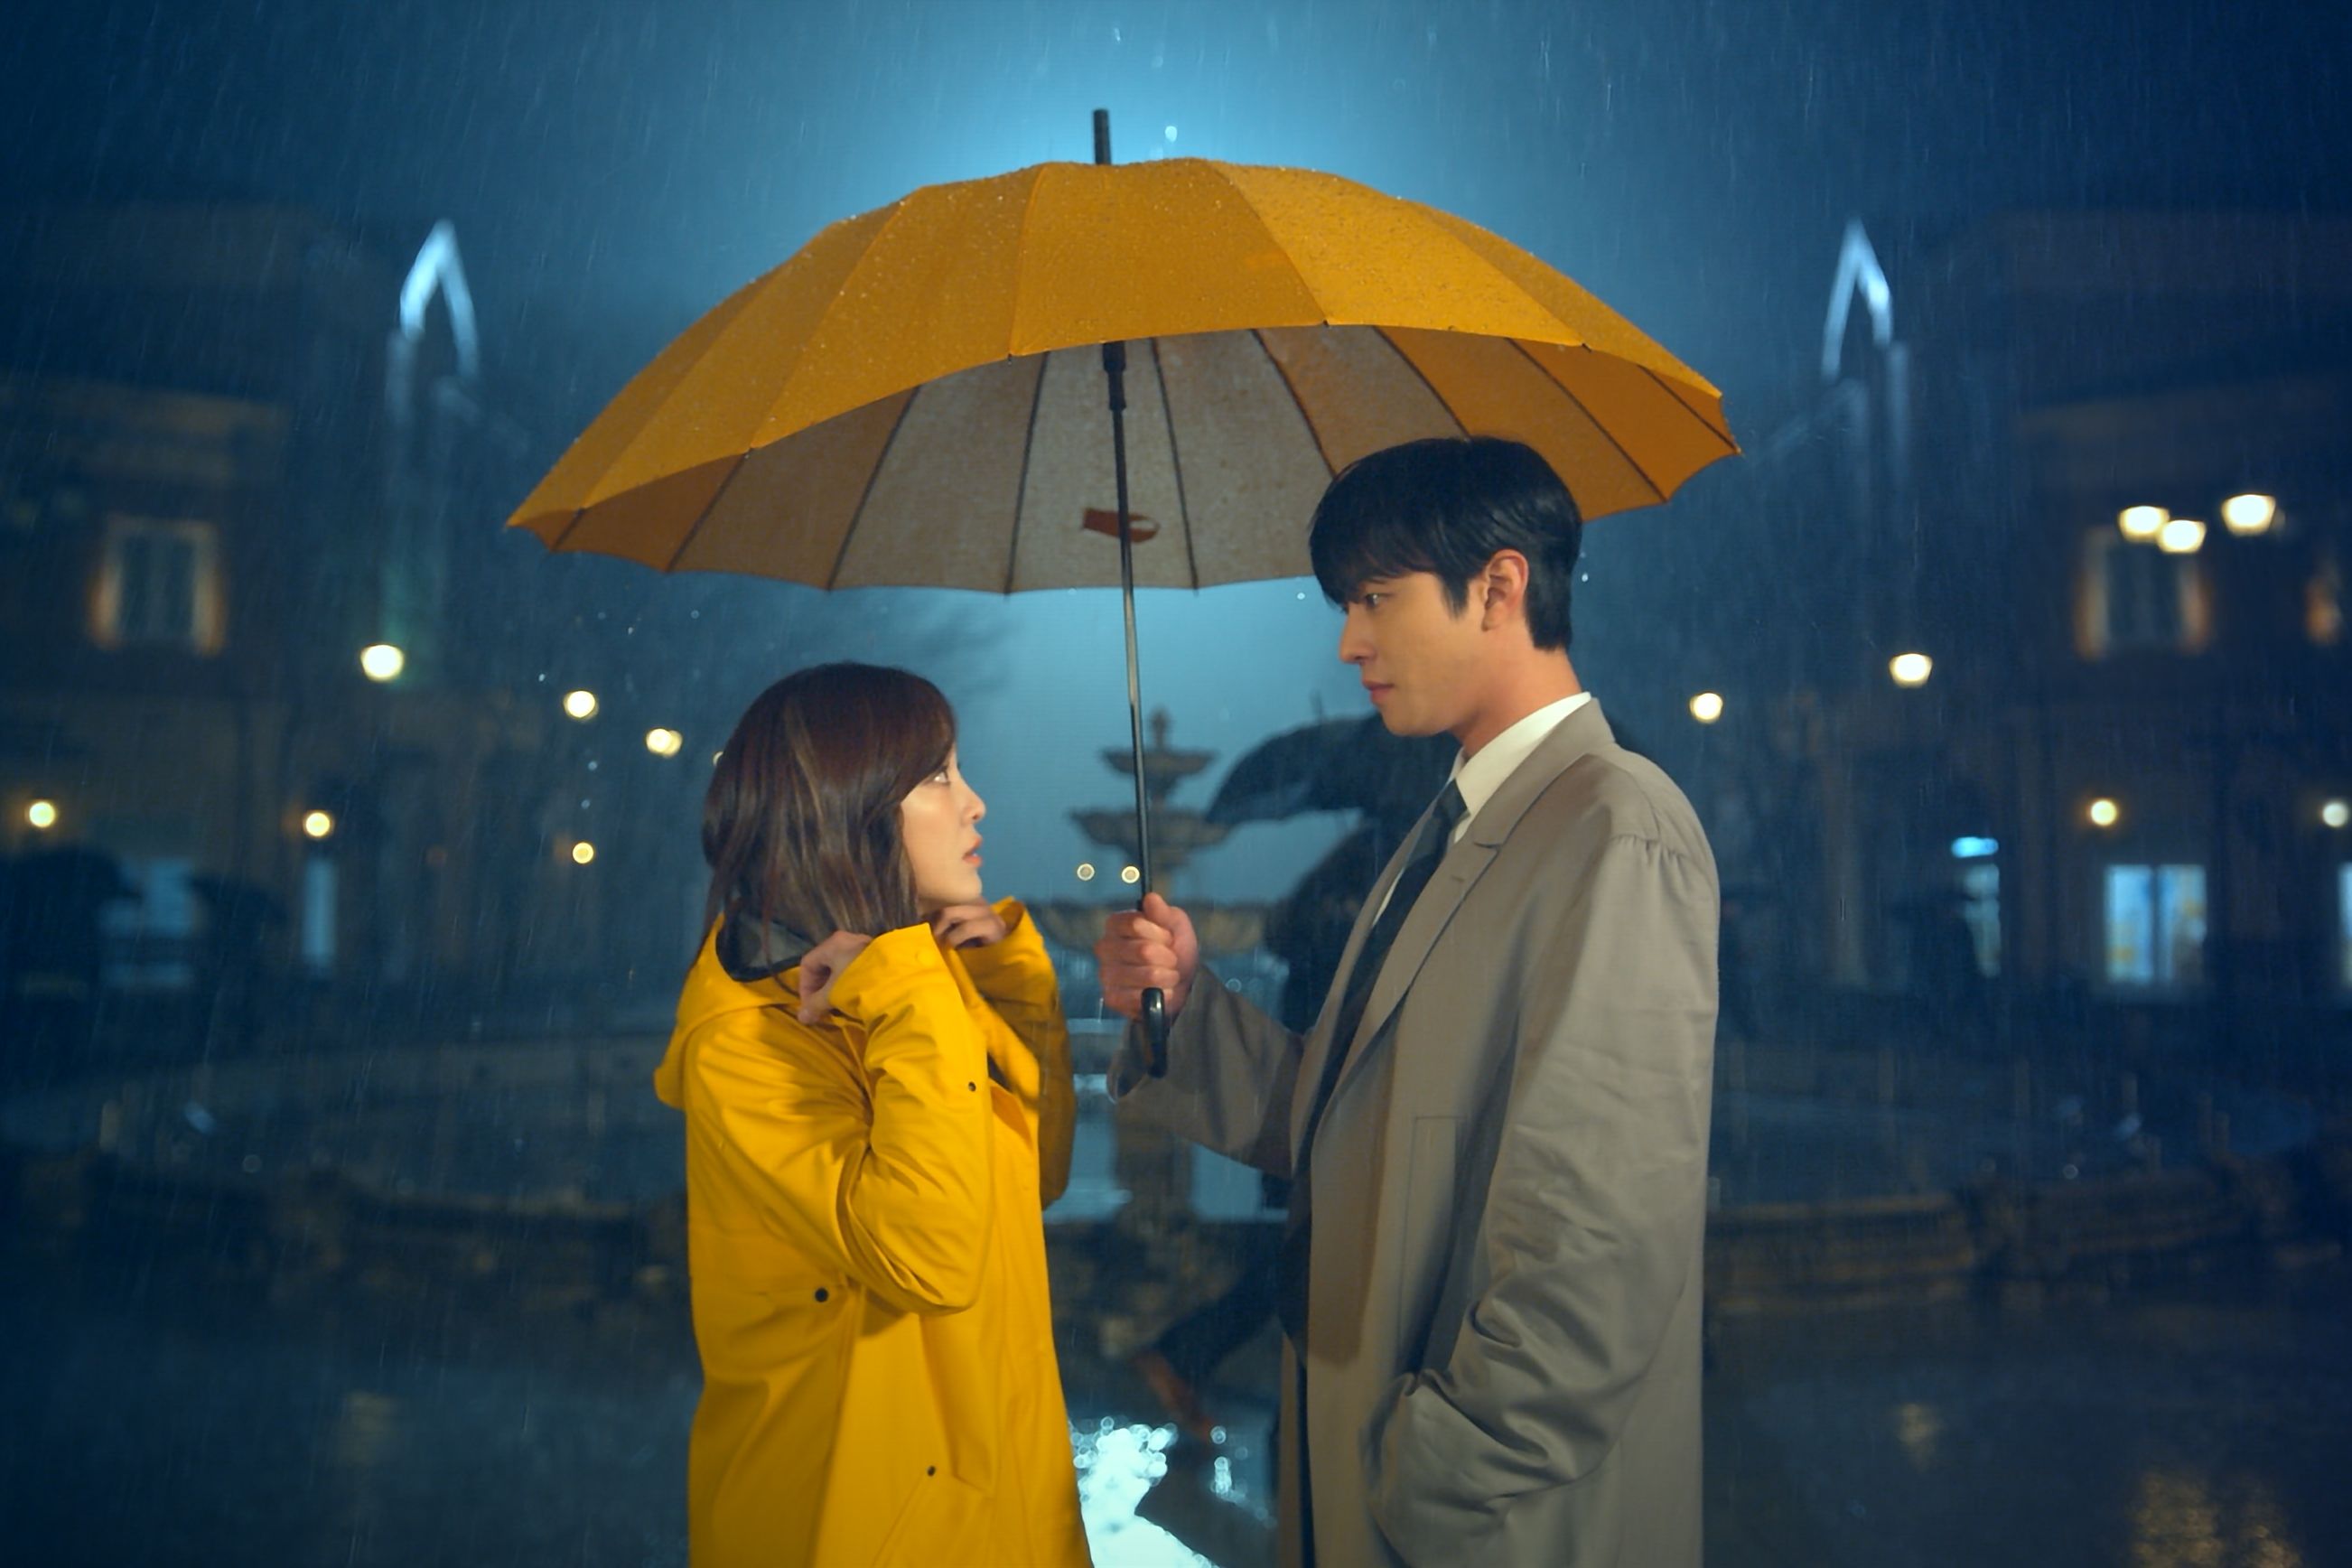 True Beauty To Start Up: 4 Must-Watch Korean Dramas Featuring A